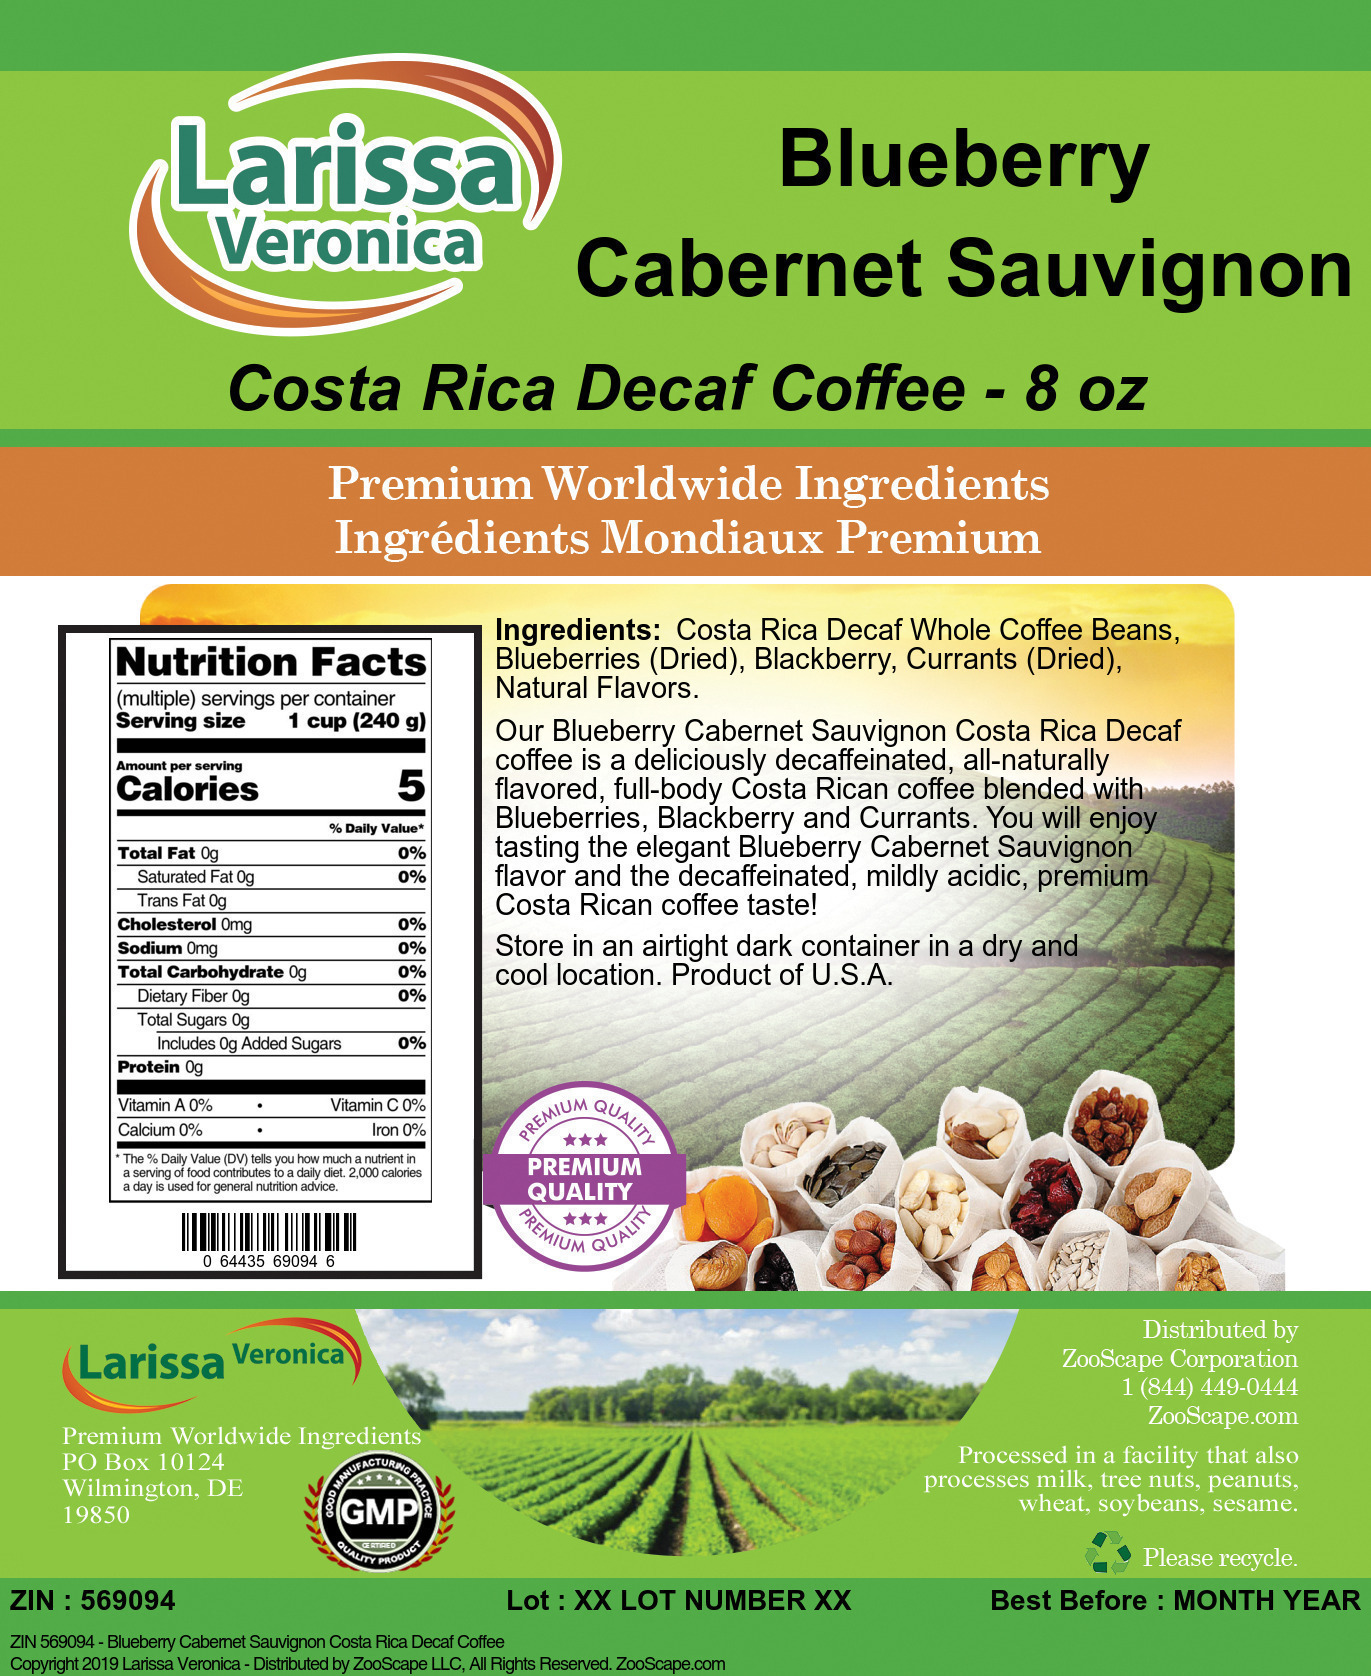 Blueberry Cabernet Sauvignon Costa Rica Decaf Coffee - Label